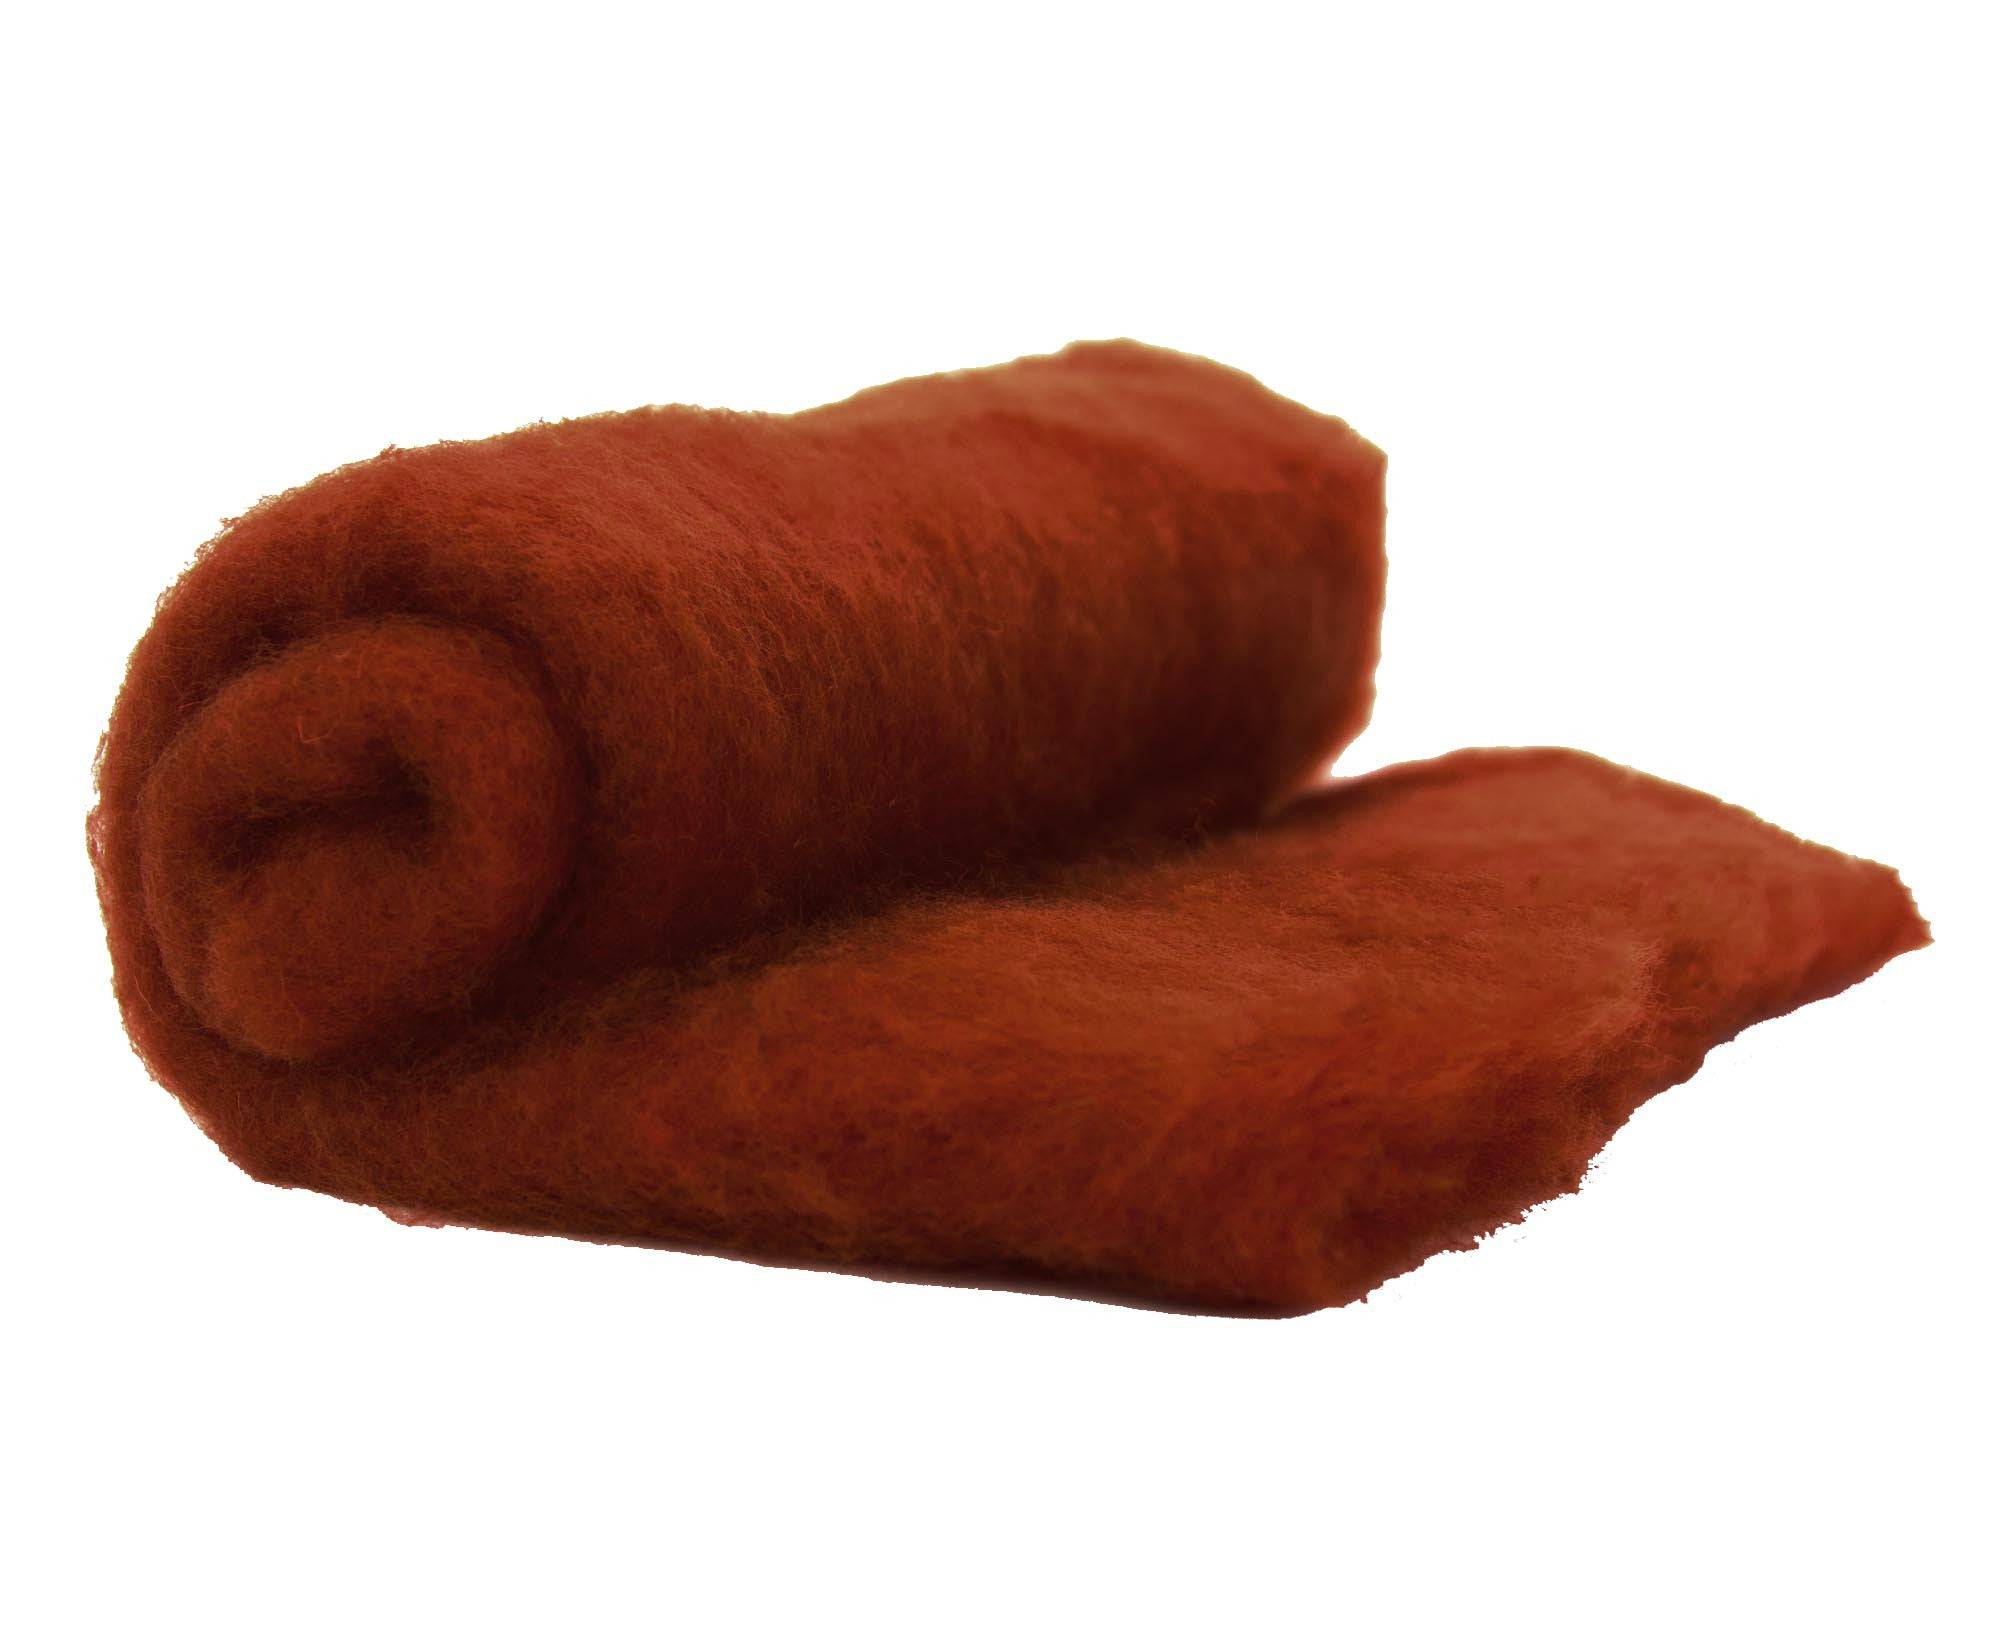 Carded Perendale Batt Rust - World of Wool